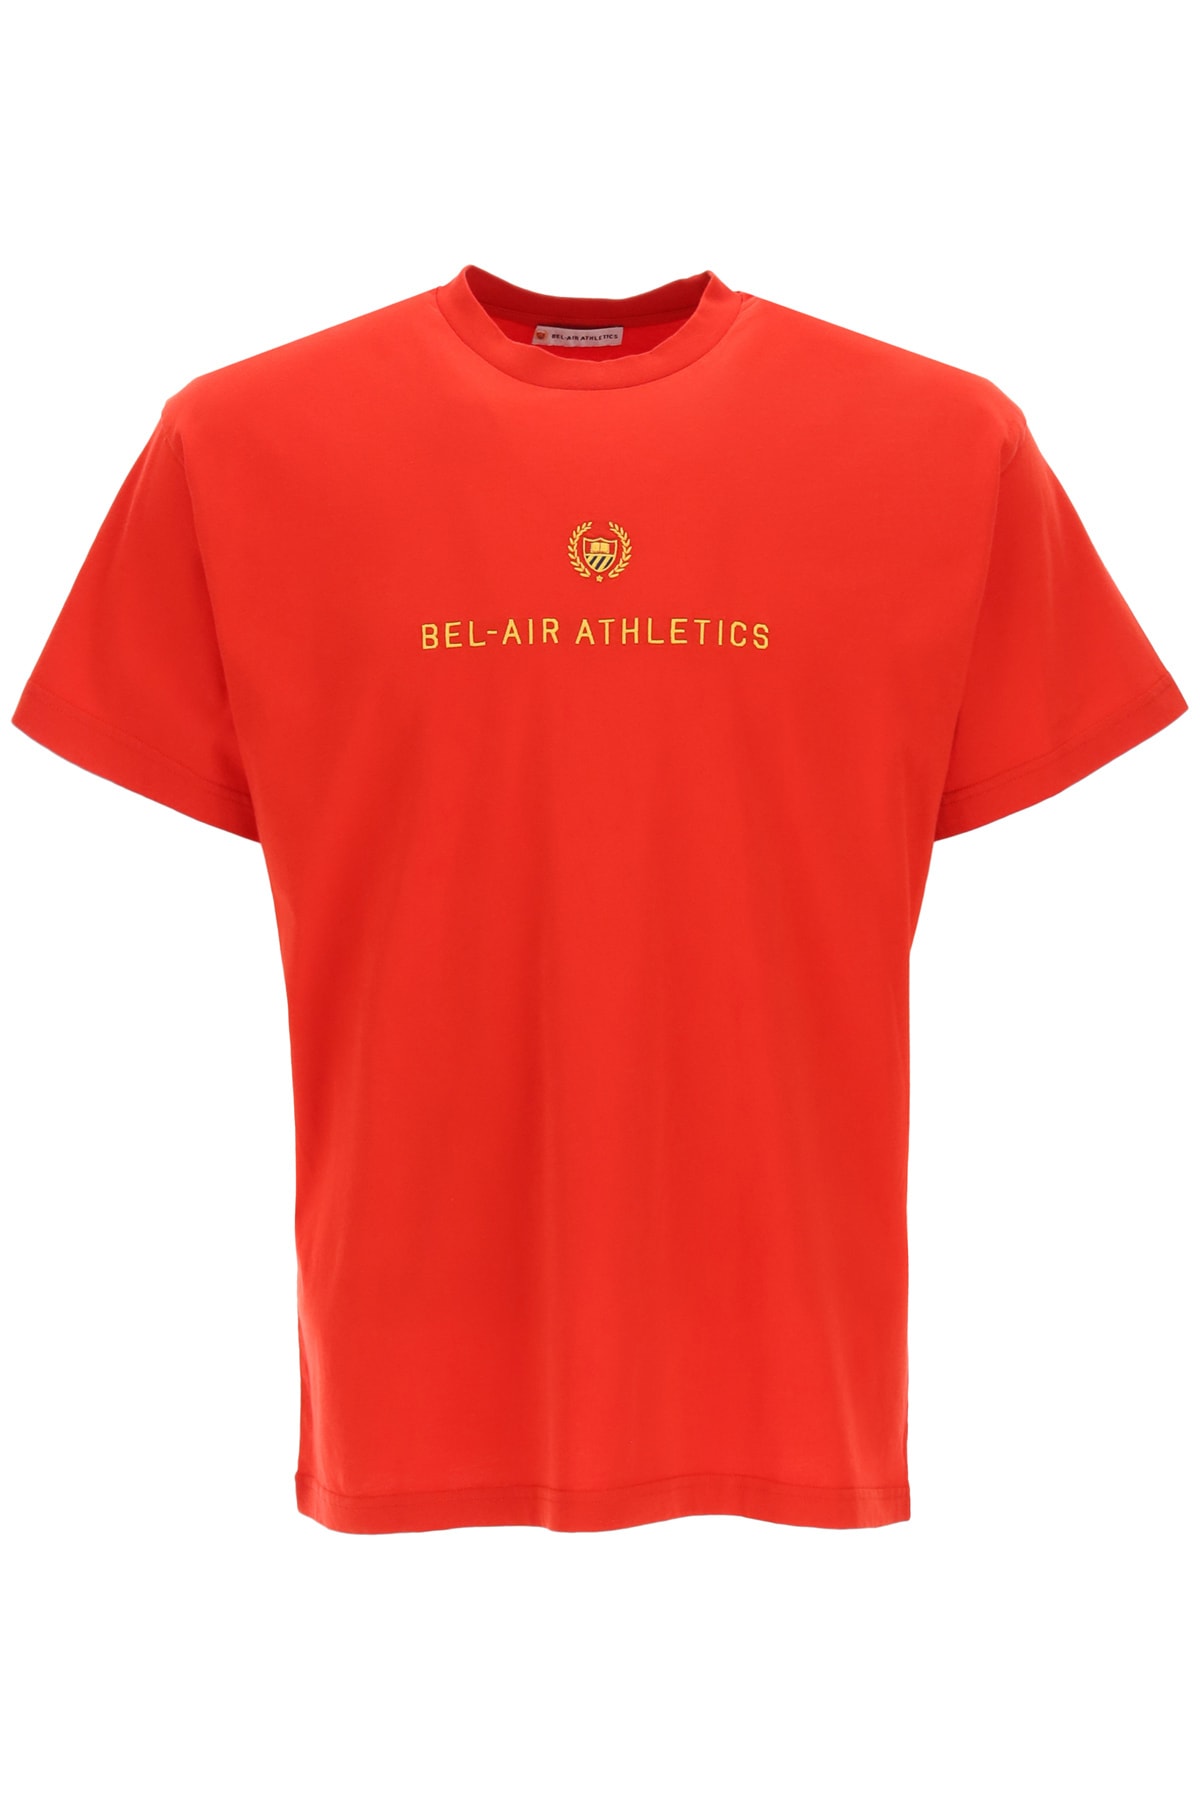 Bel-Air Athletics Academy Crest T-shirt